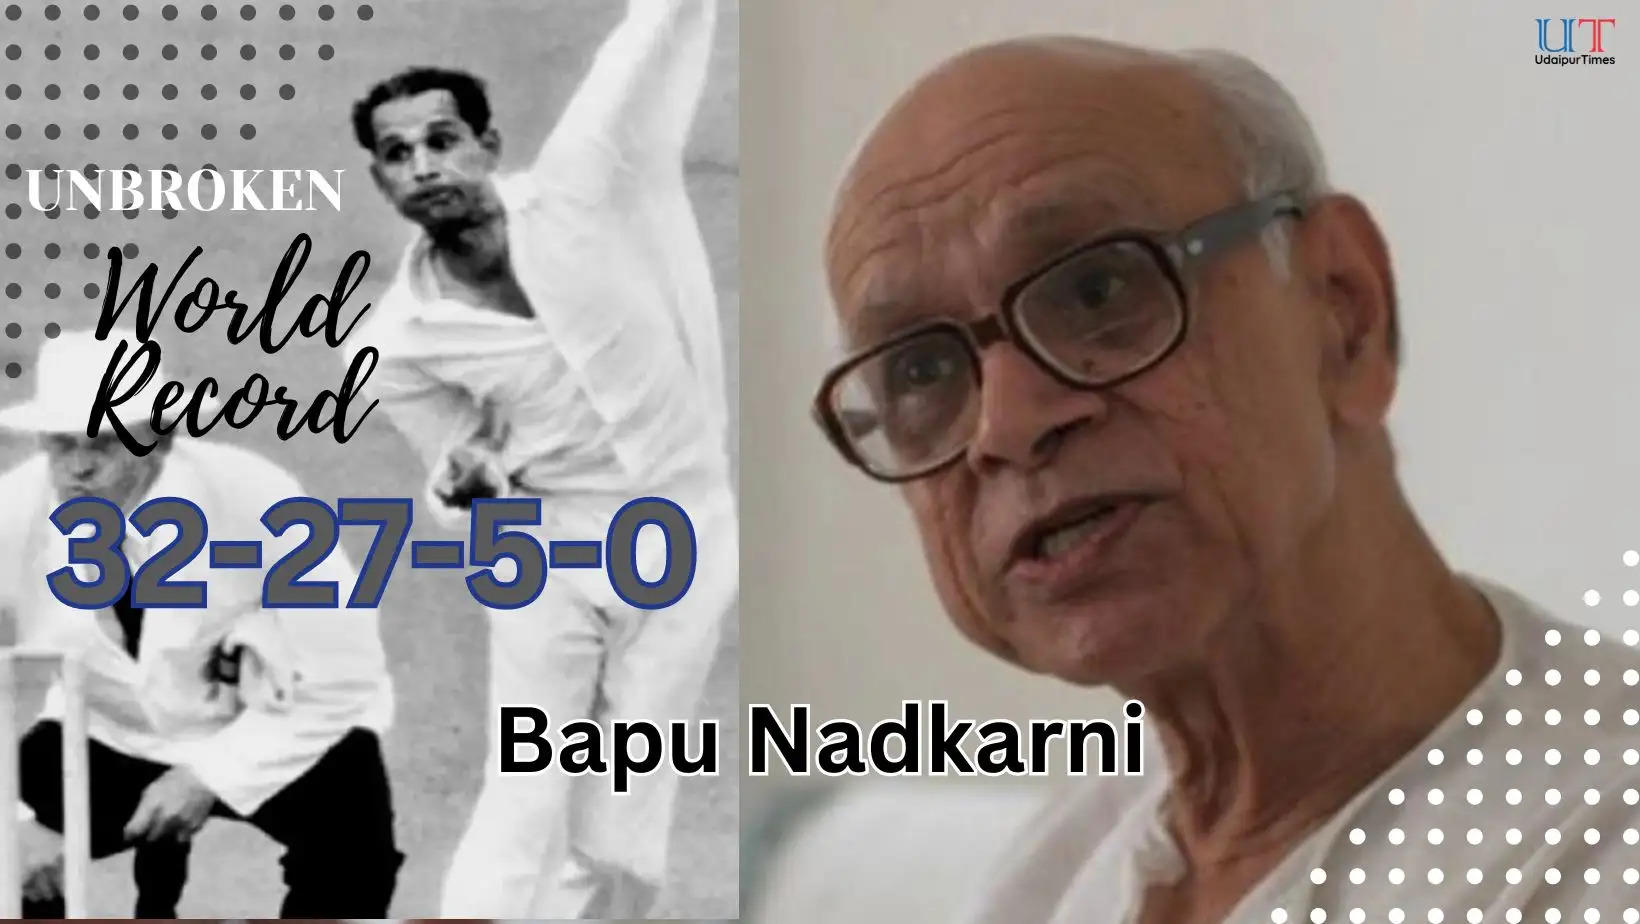 Bapu Nadkarni 4th Death Anniversary. Unbroken World Record in Test Matches